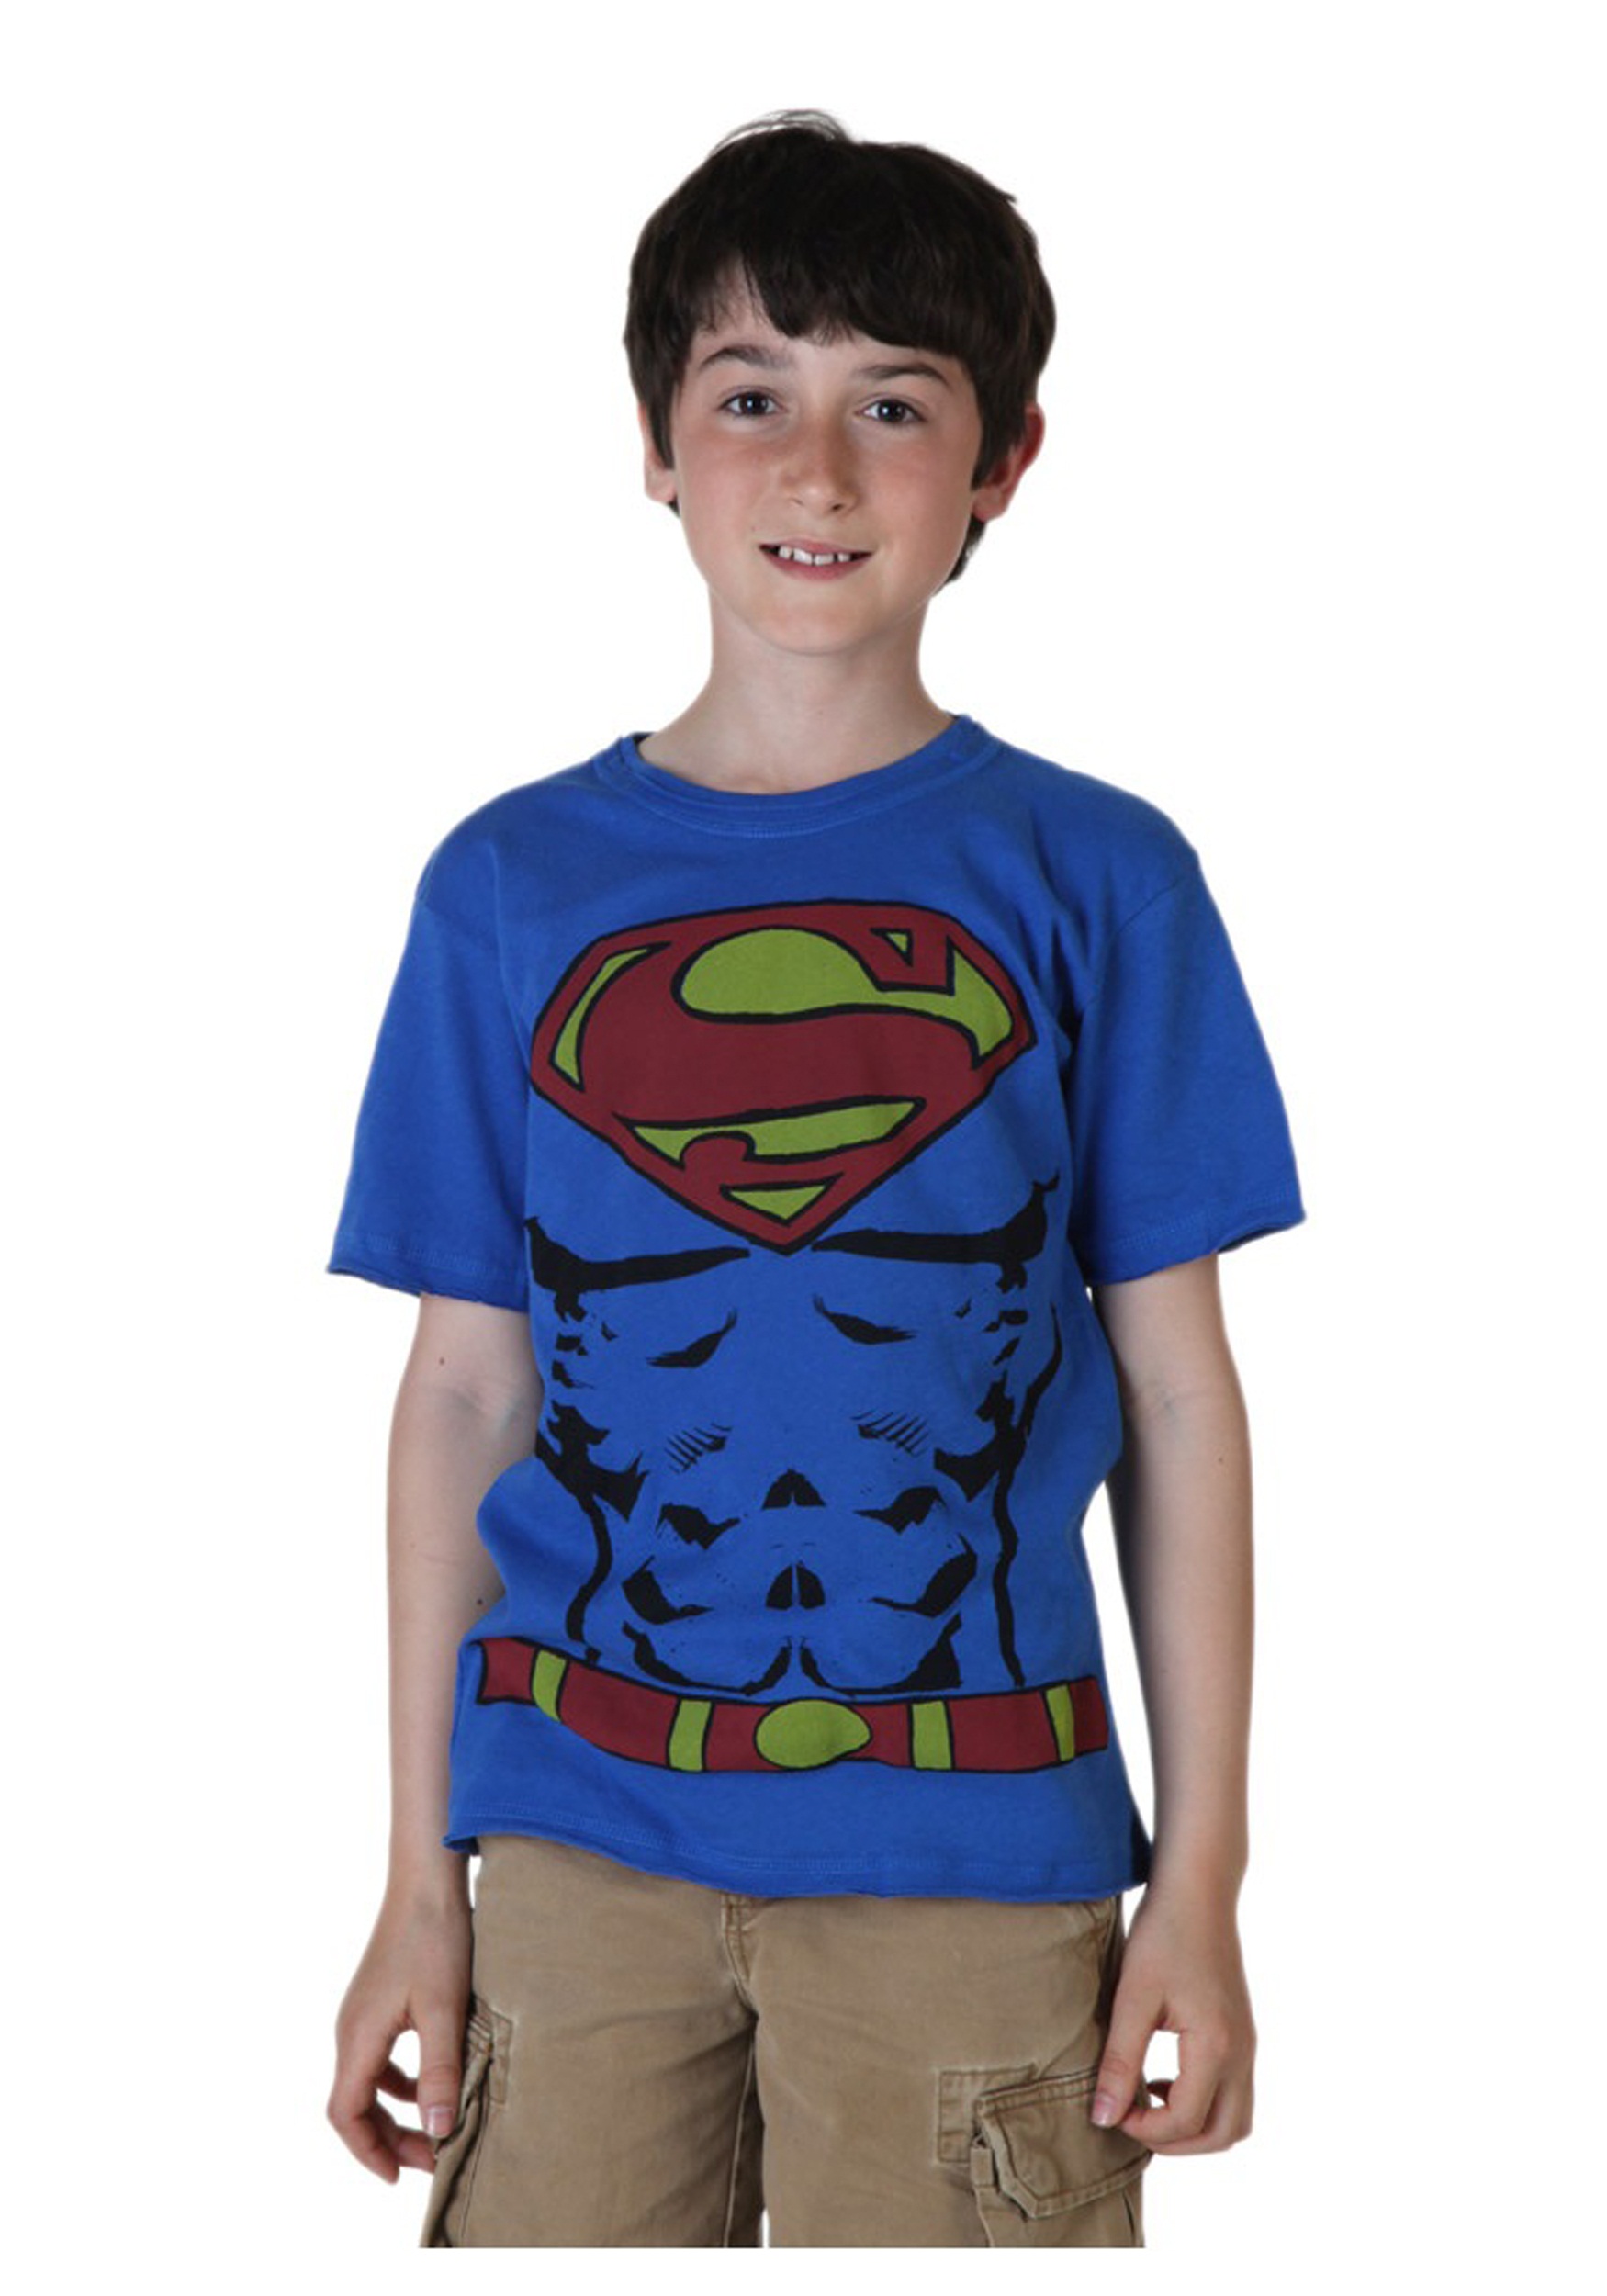 Boys Muscle Superman Costume T-Shirt - Halloween Costume Ideas 2021